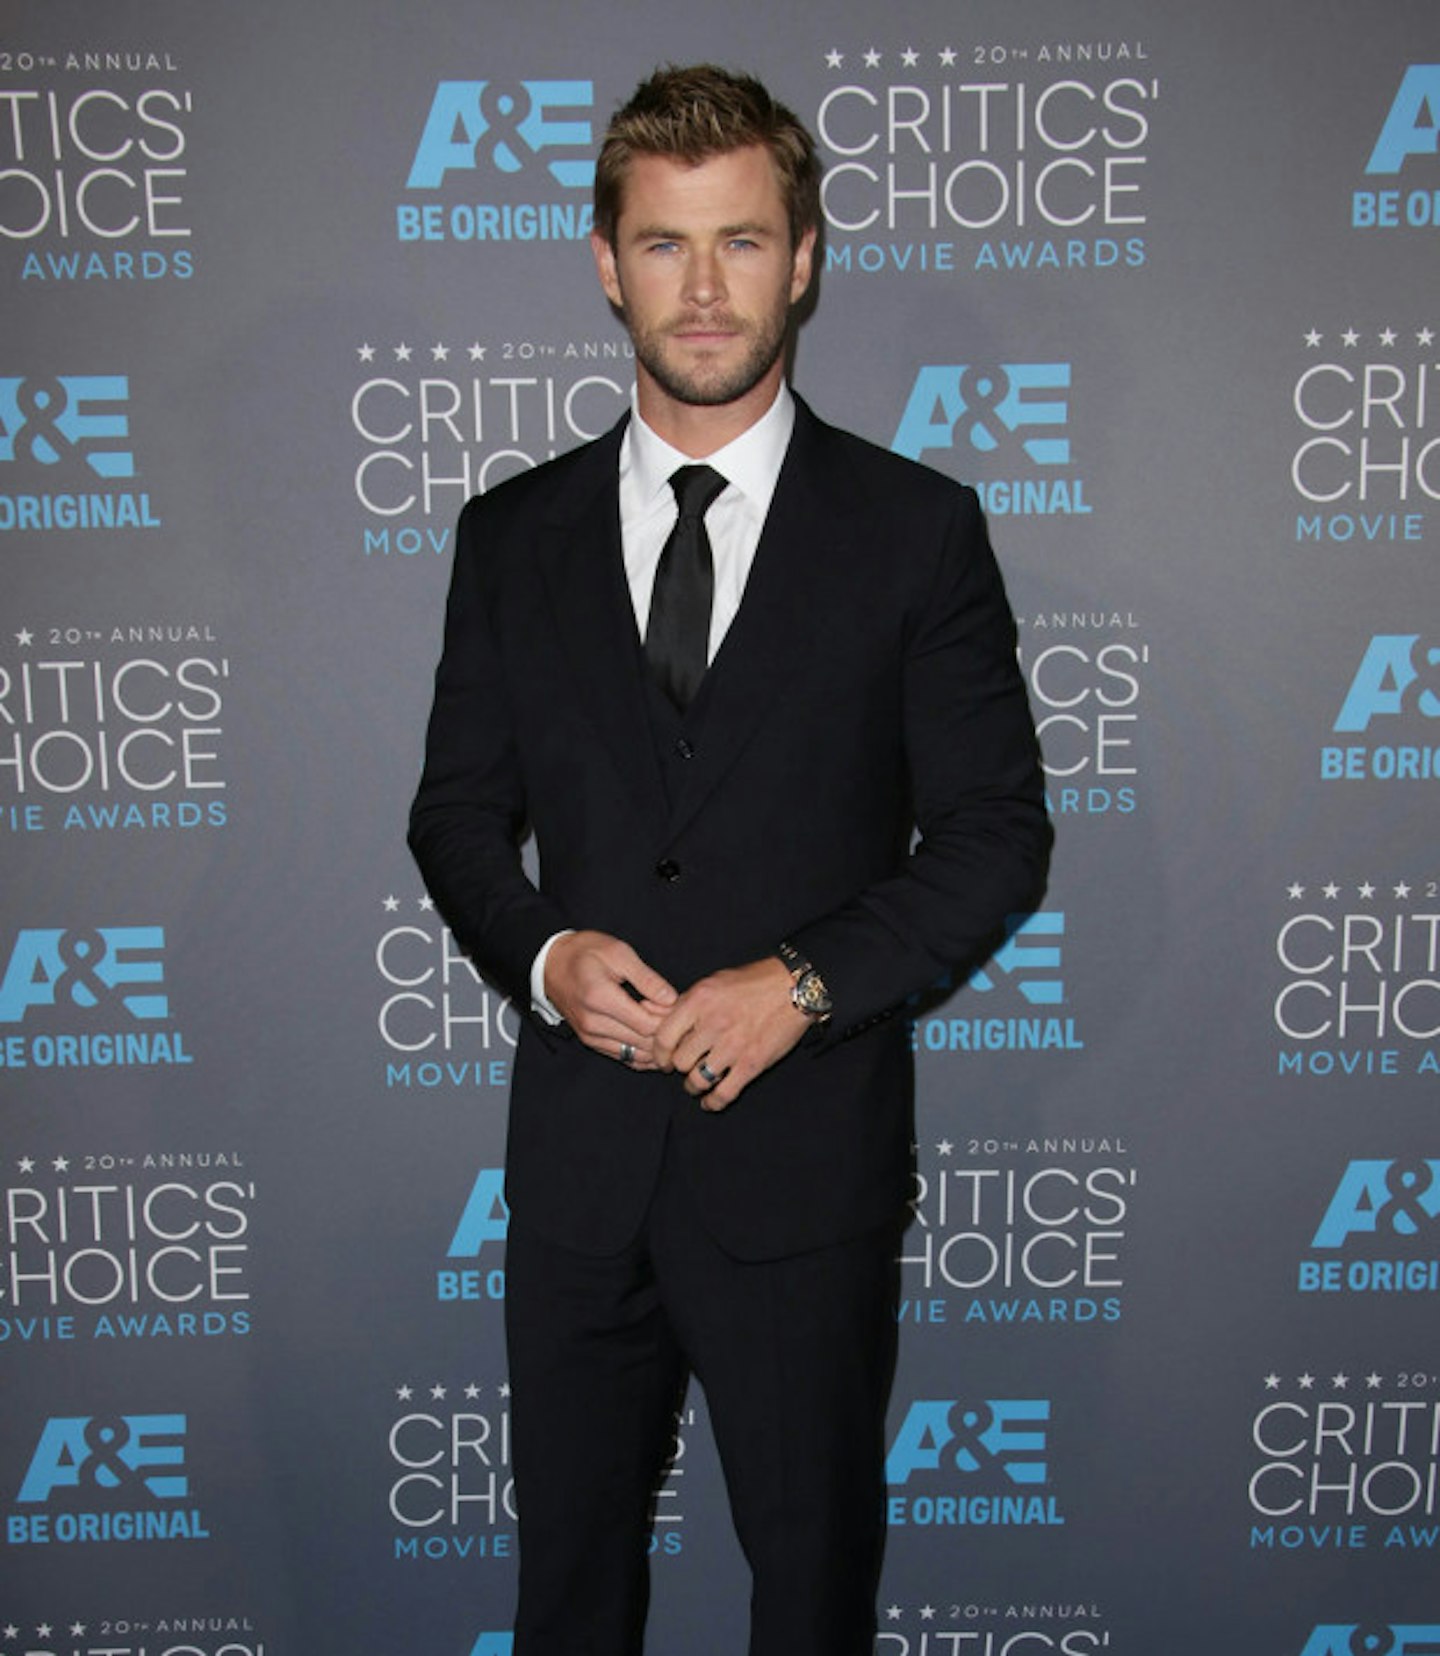 Chris Hemsworth, hot Australian actor